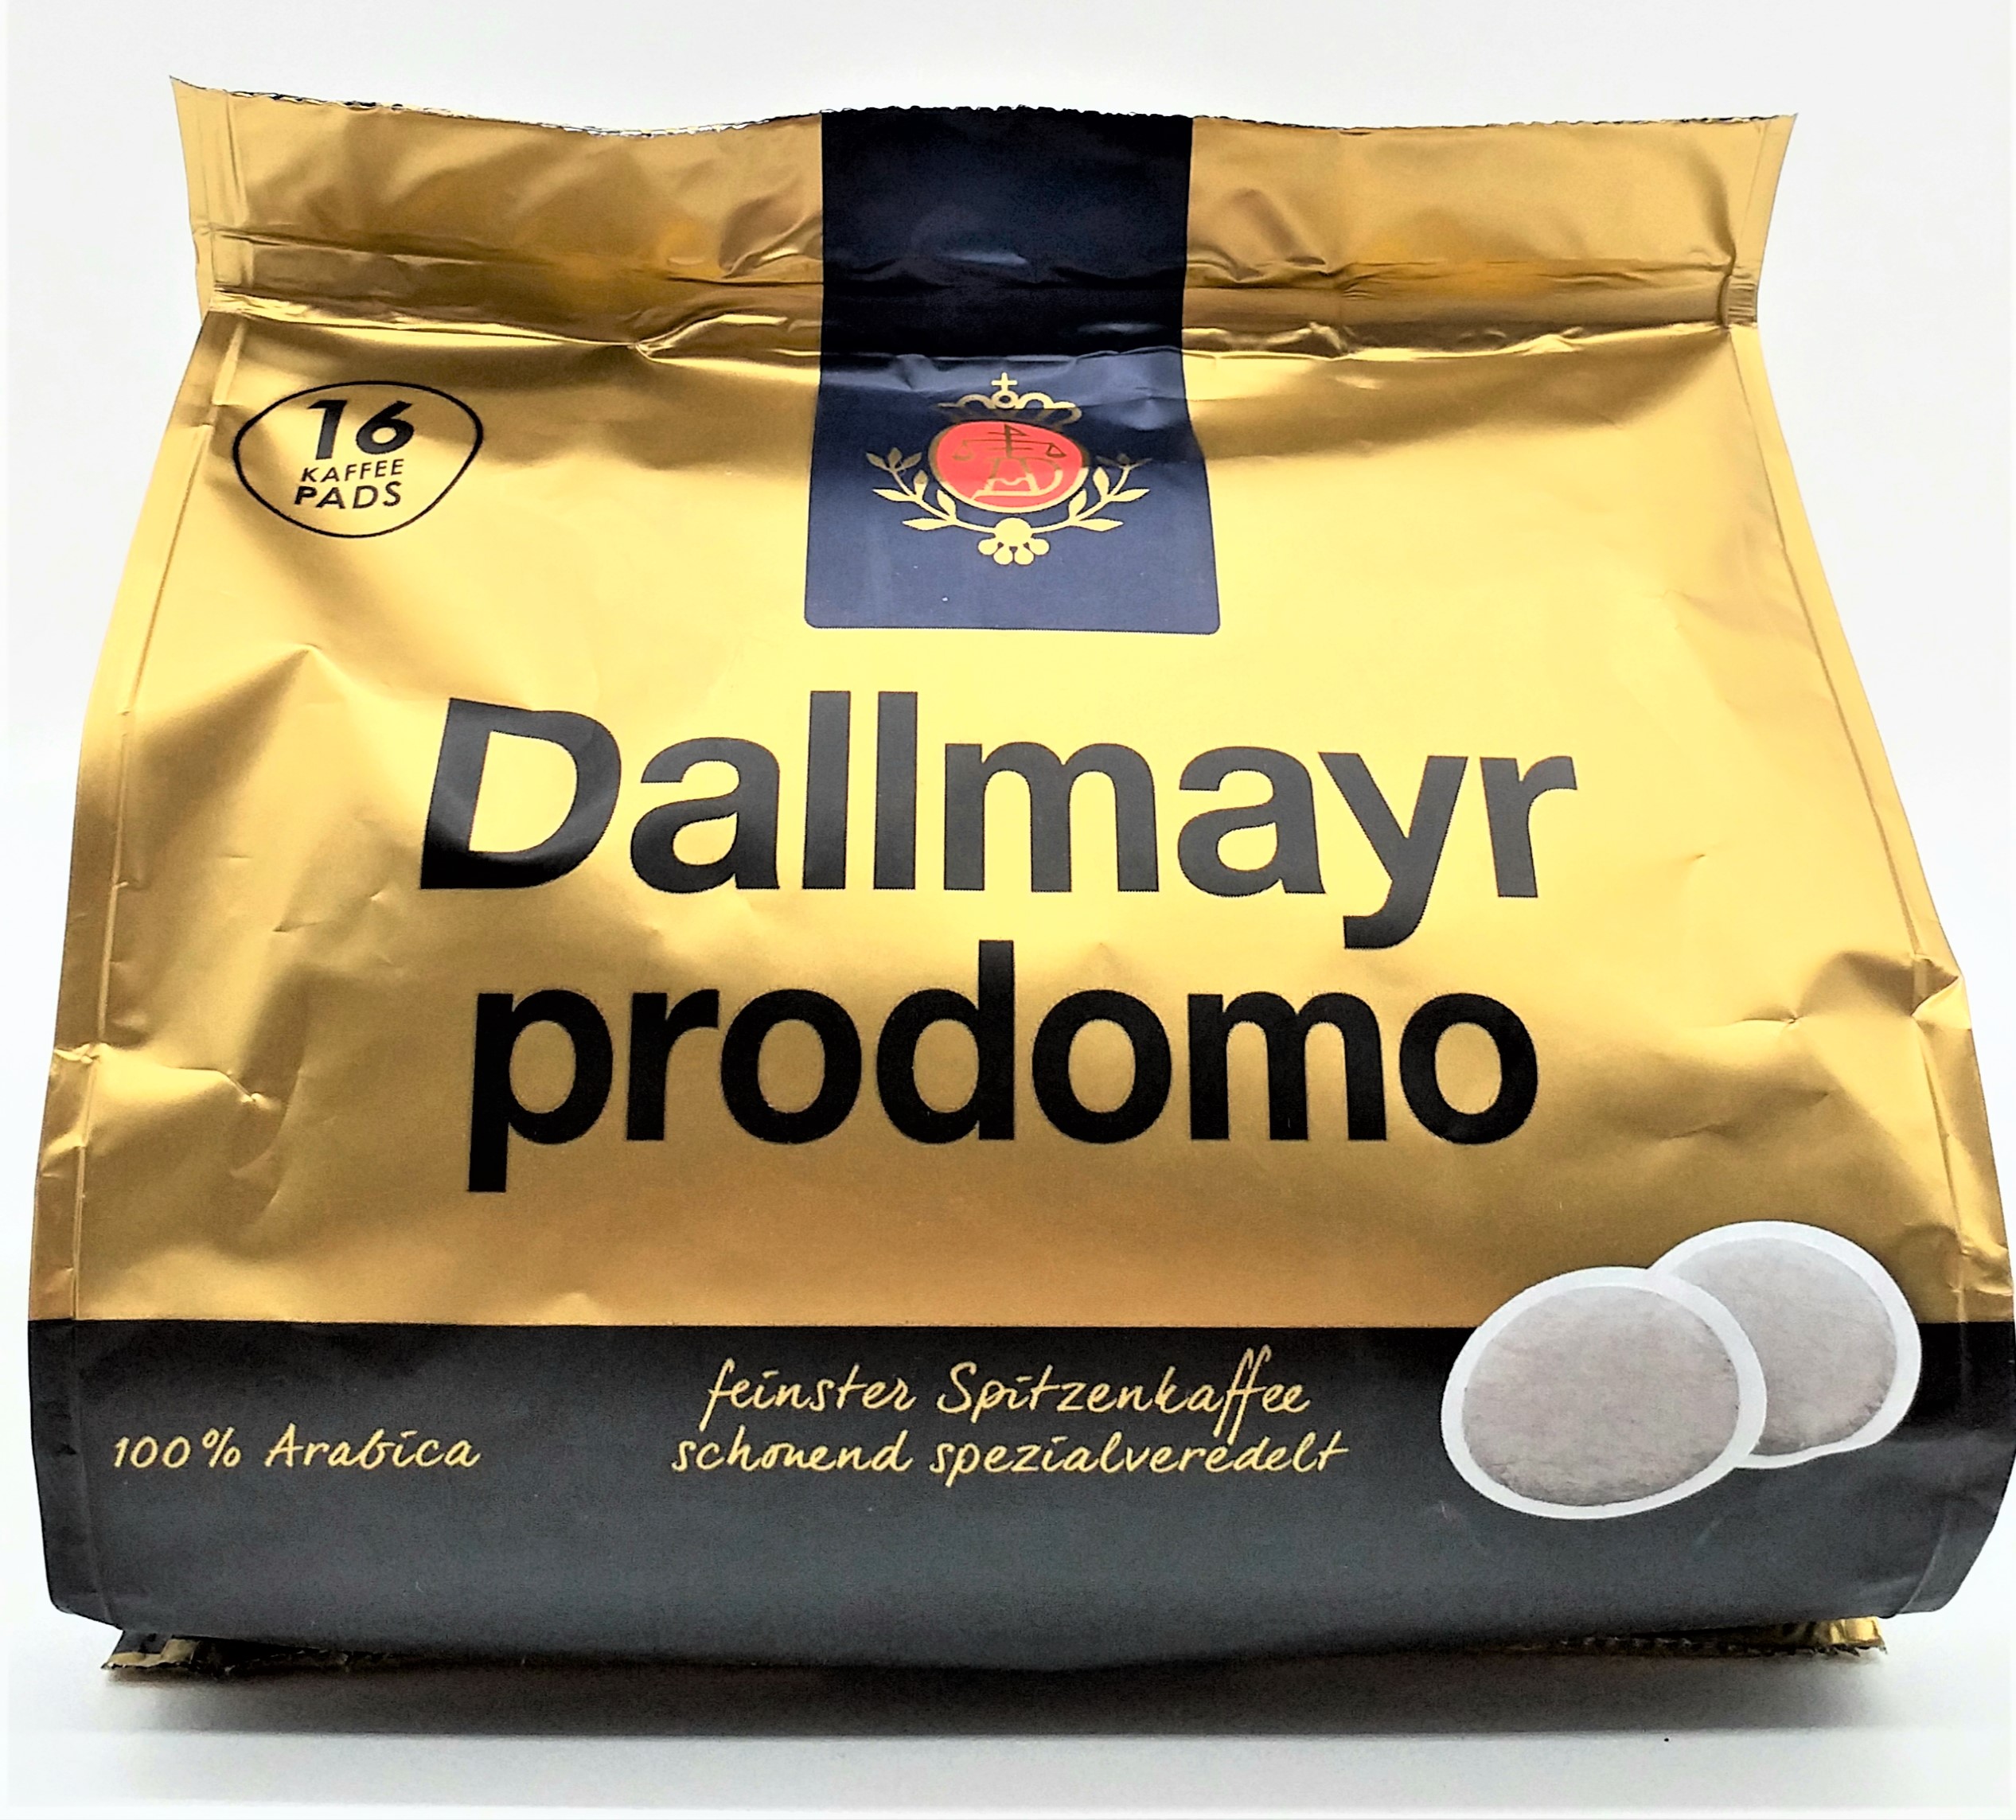 Dallmayr Prodomo 16 Pads gesamt 112g